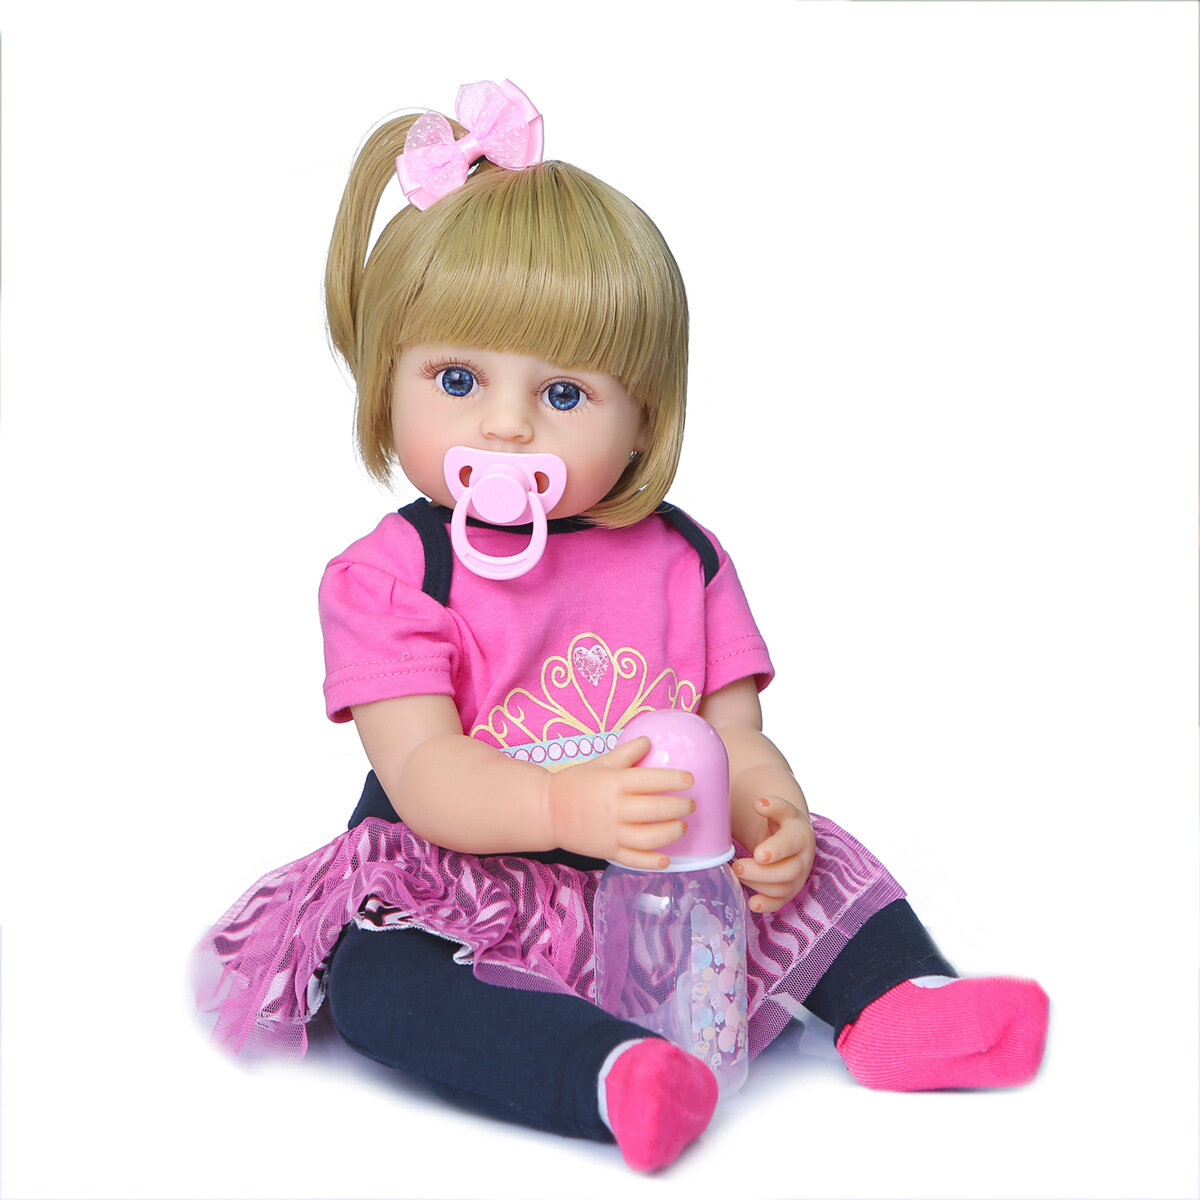 Children Toy Gift Realistic Baby Dolls for KidsA12